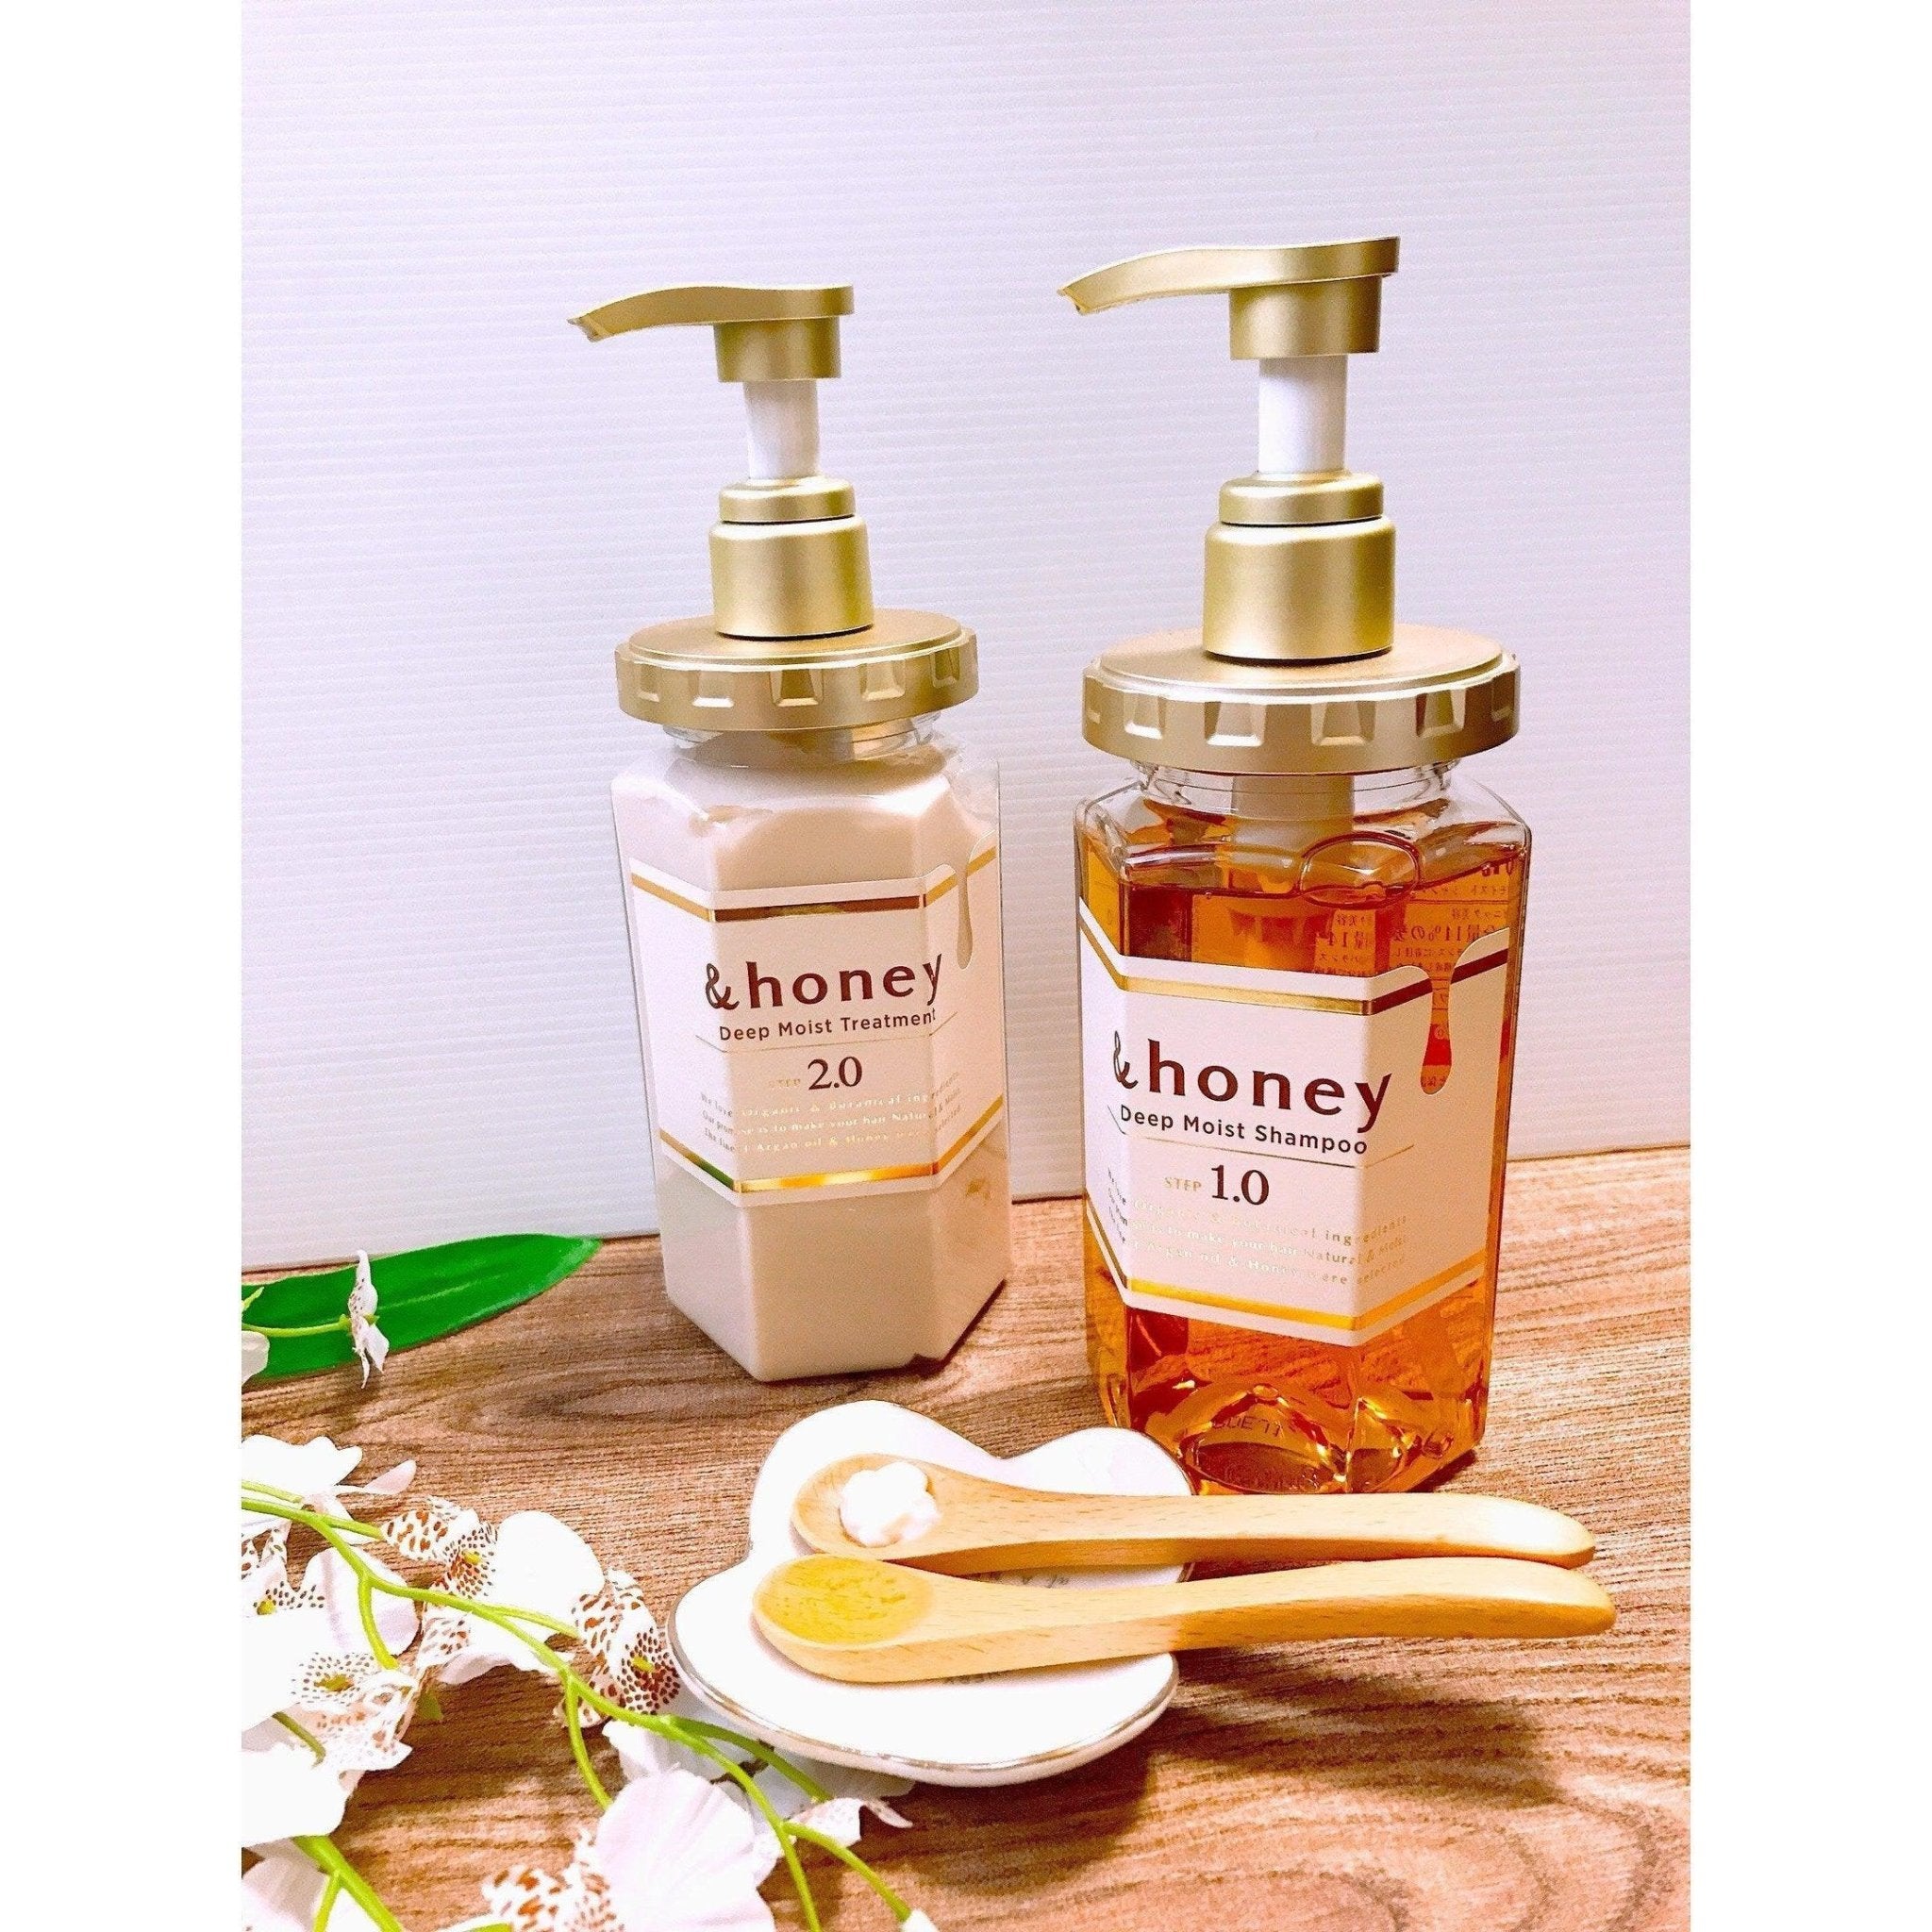 &honey Deep Moist Treatment 2.0 (Japanese Honey Hair Conditioner) 445g - YOYO JAPAN